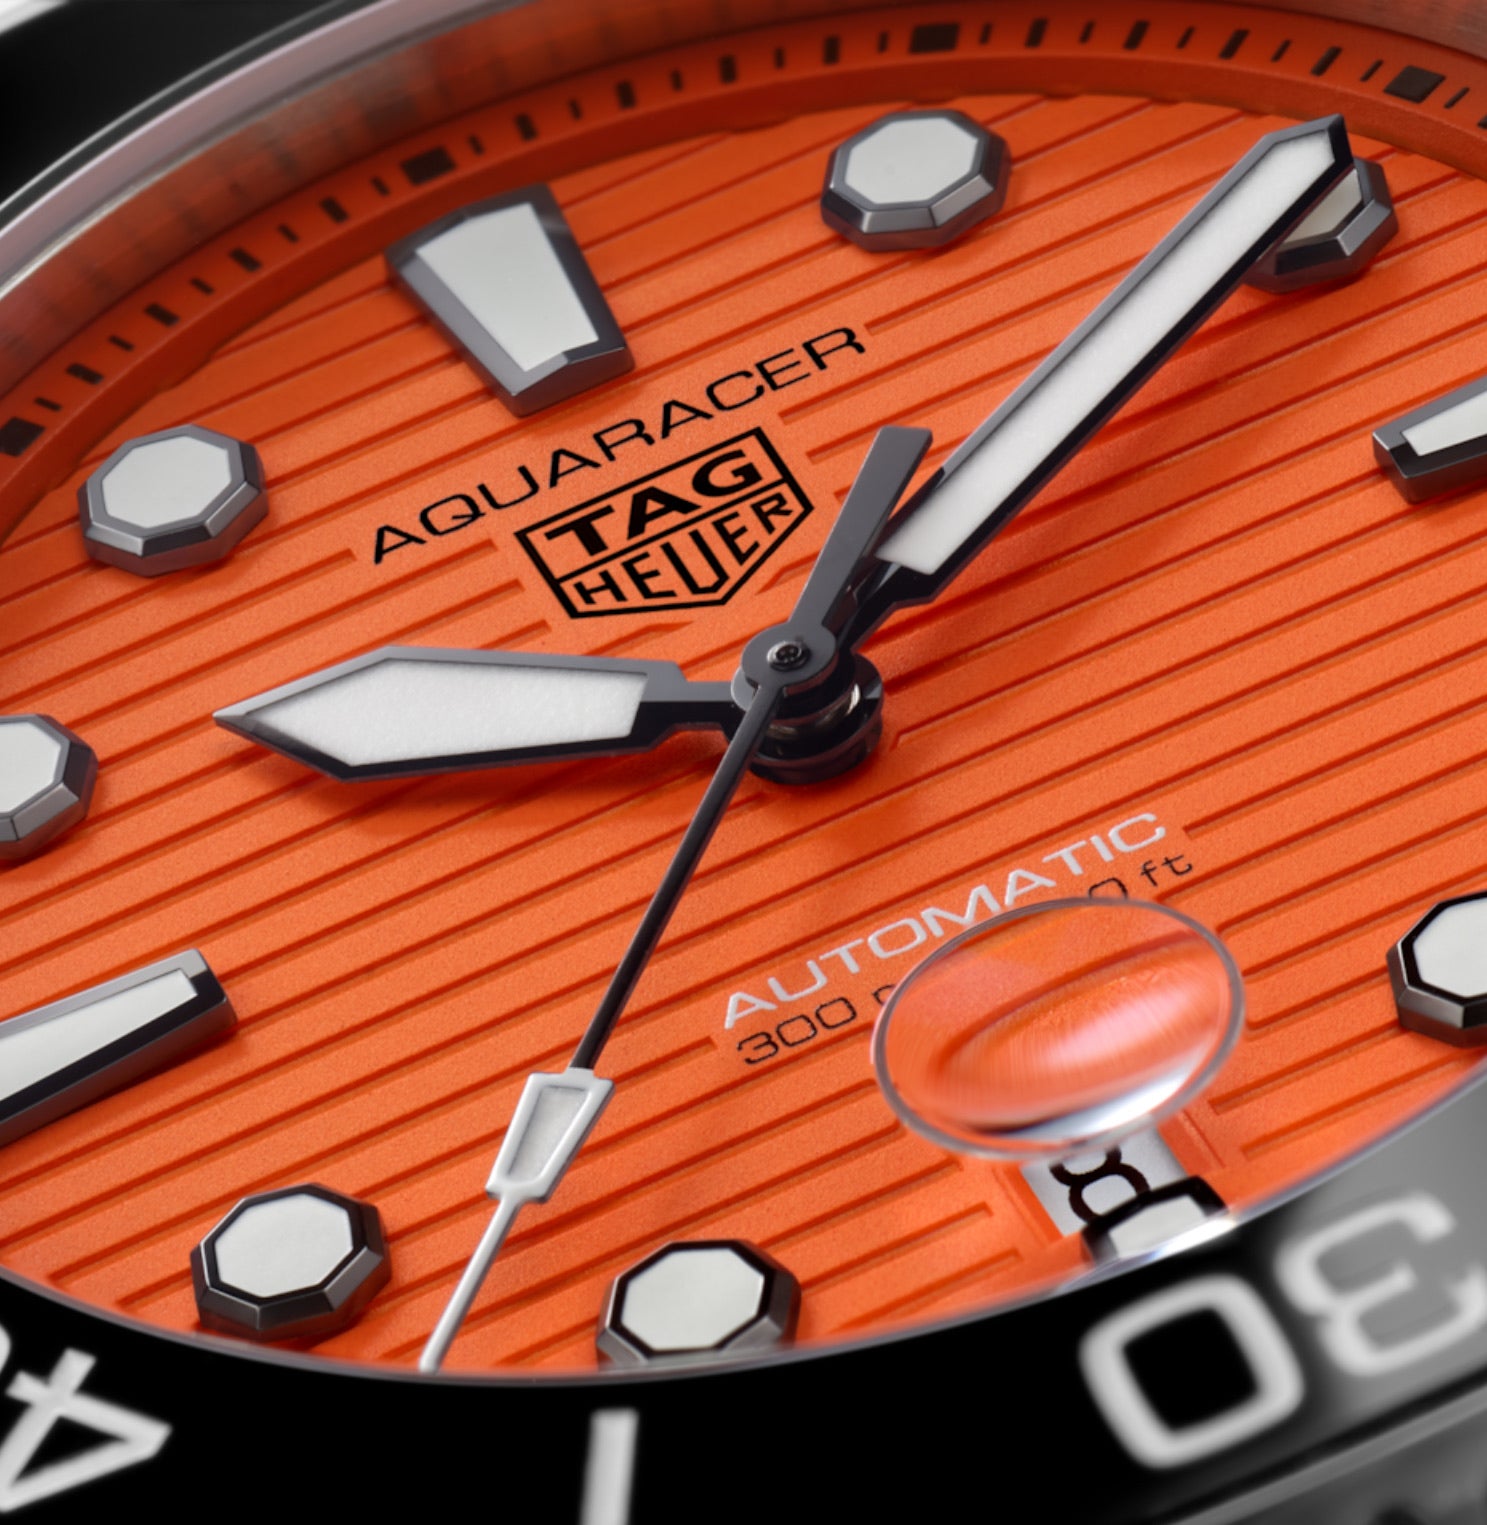 TAG HEUER Aquaracer Professional 300 Automatic Watch - Diameter 43mm